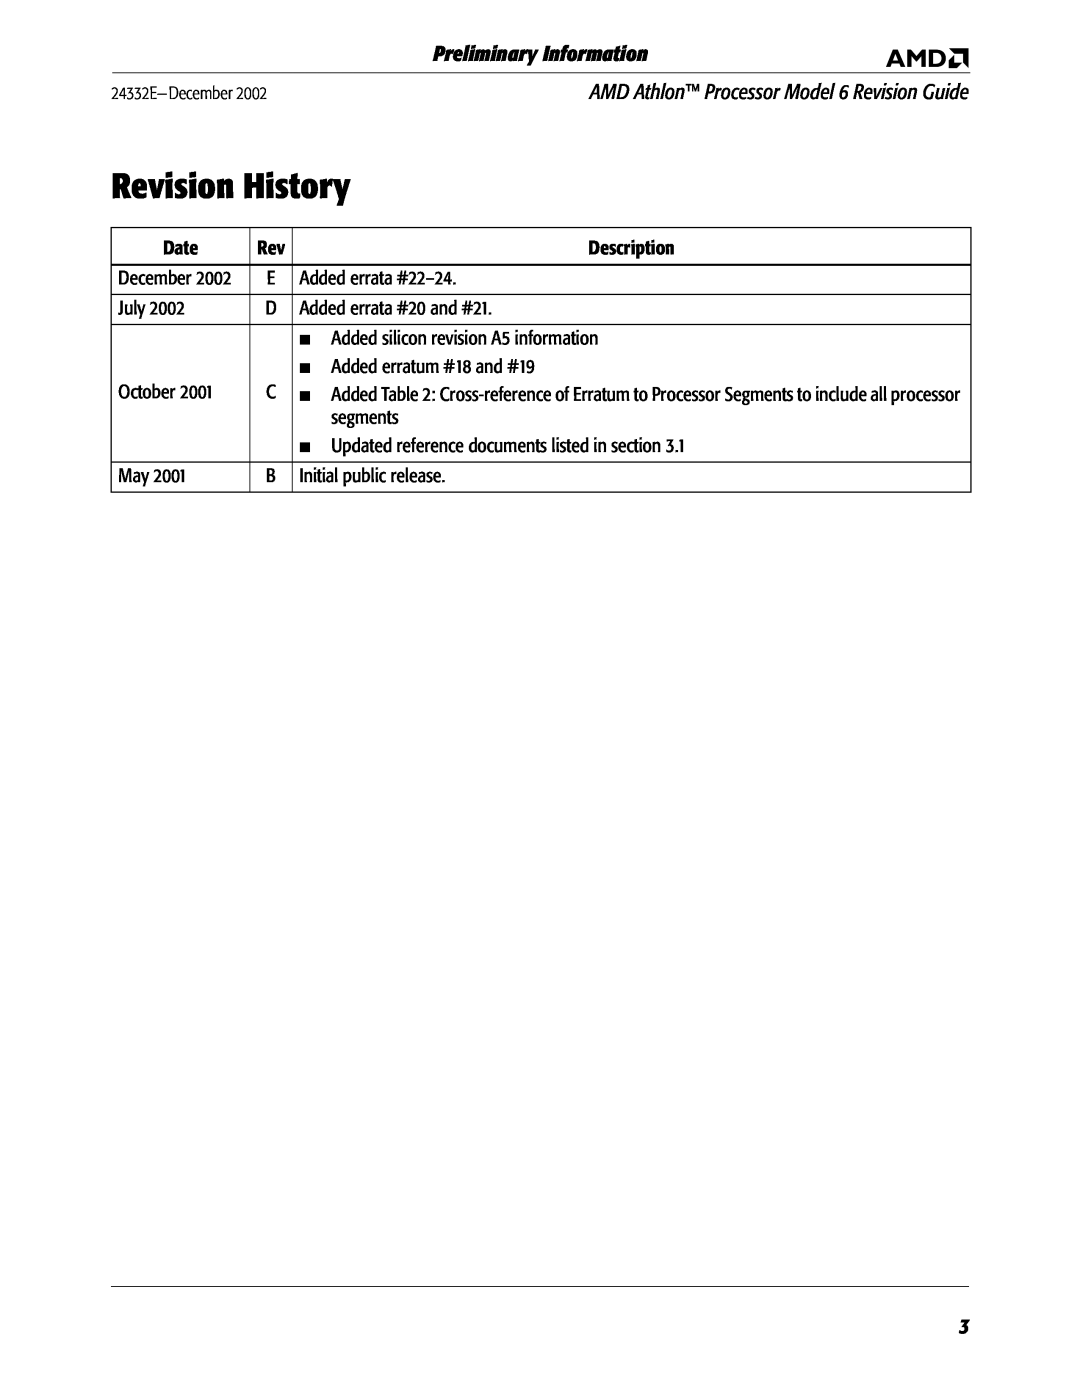 AMD 6 manual Revision History, Preliminary Information 